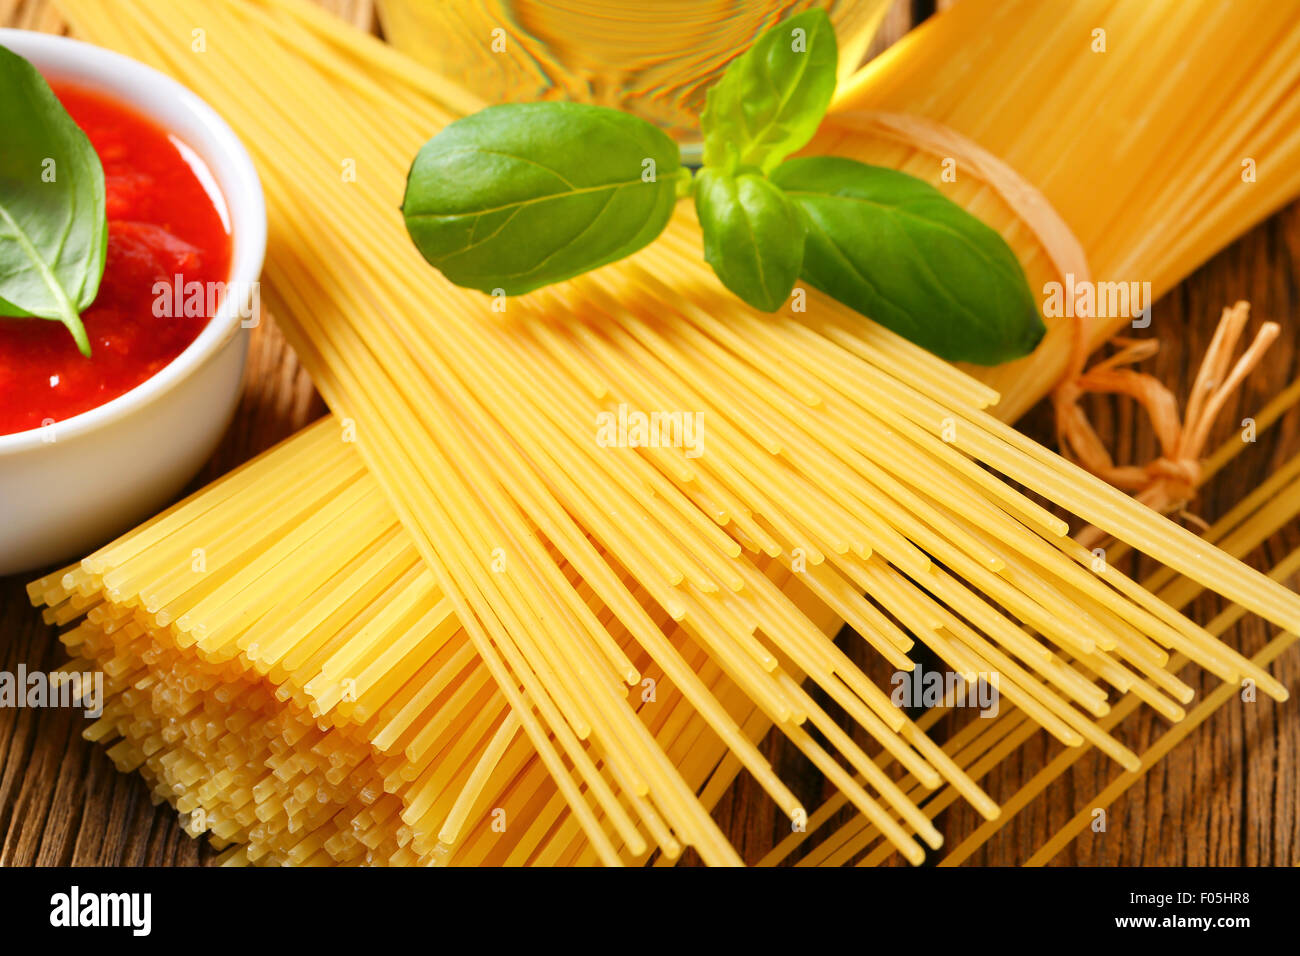 Dried spaghetti and tomato passata Stock Photo